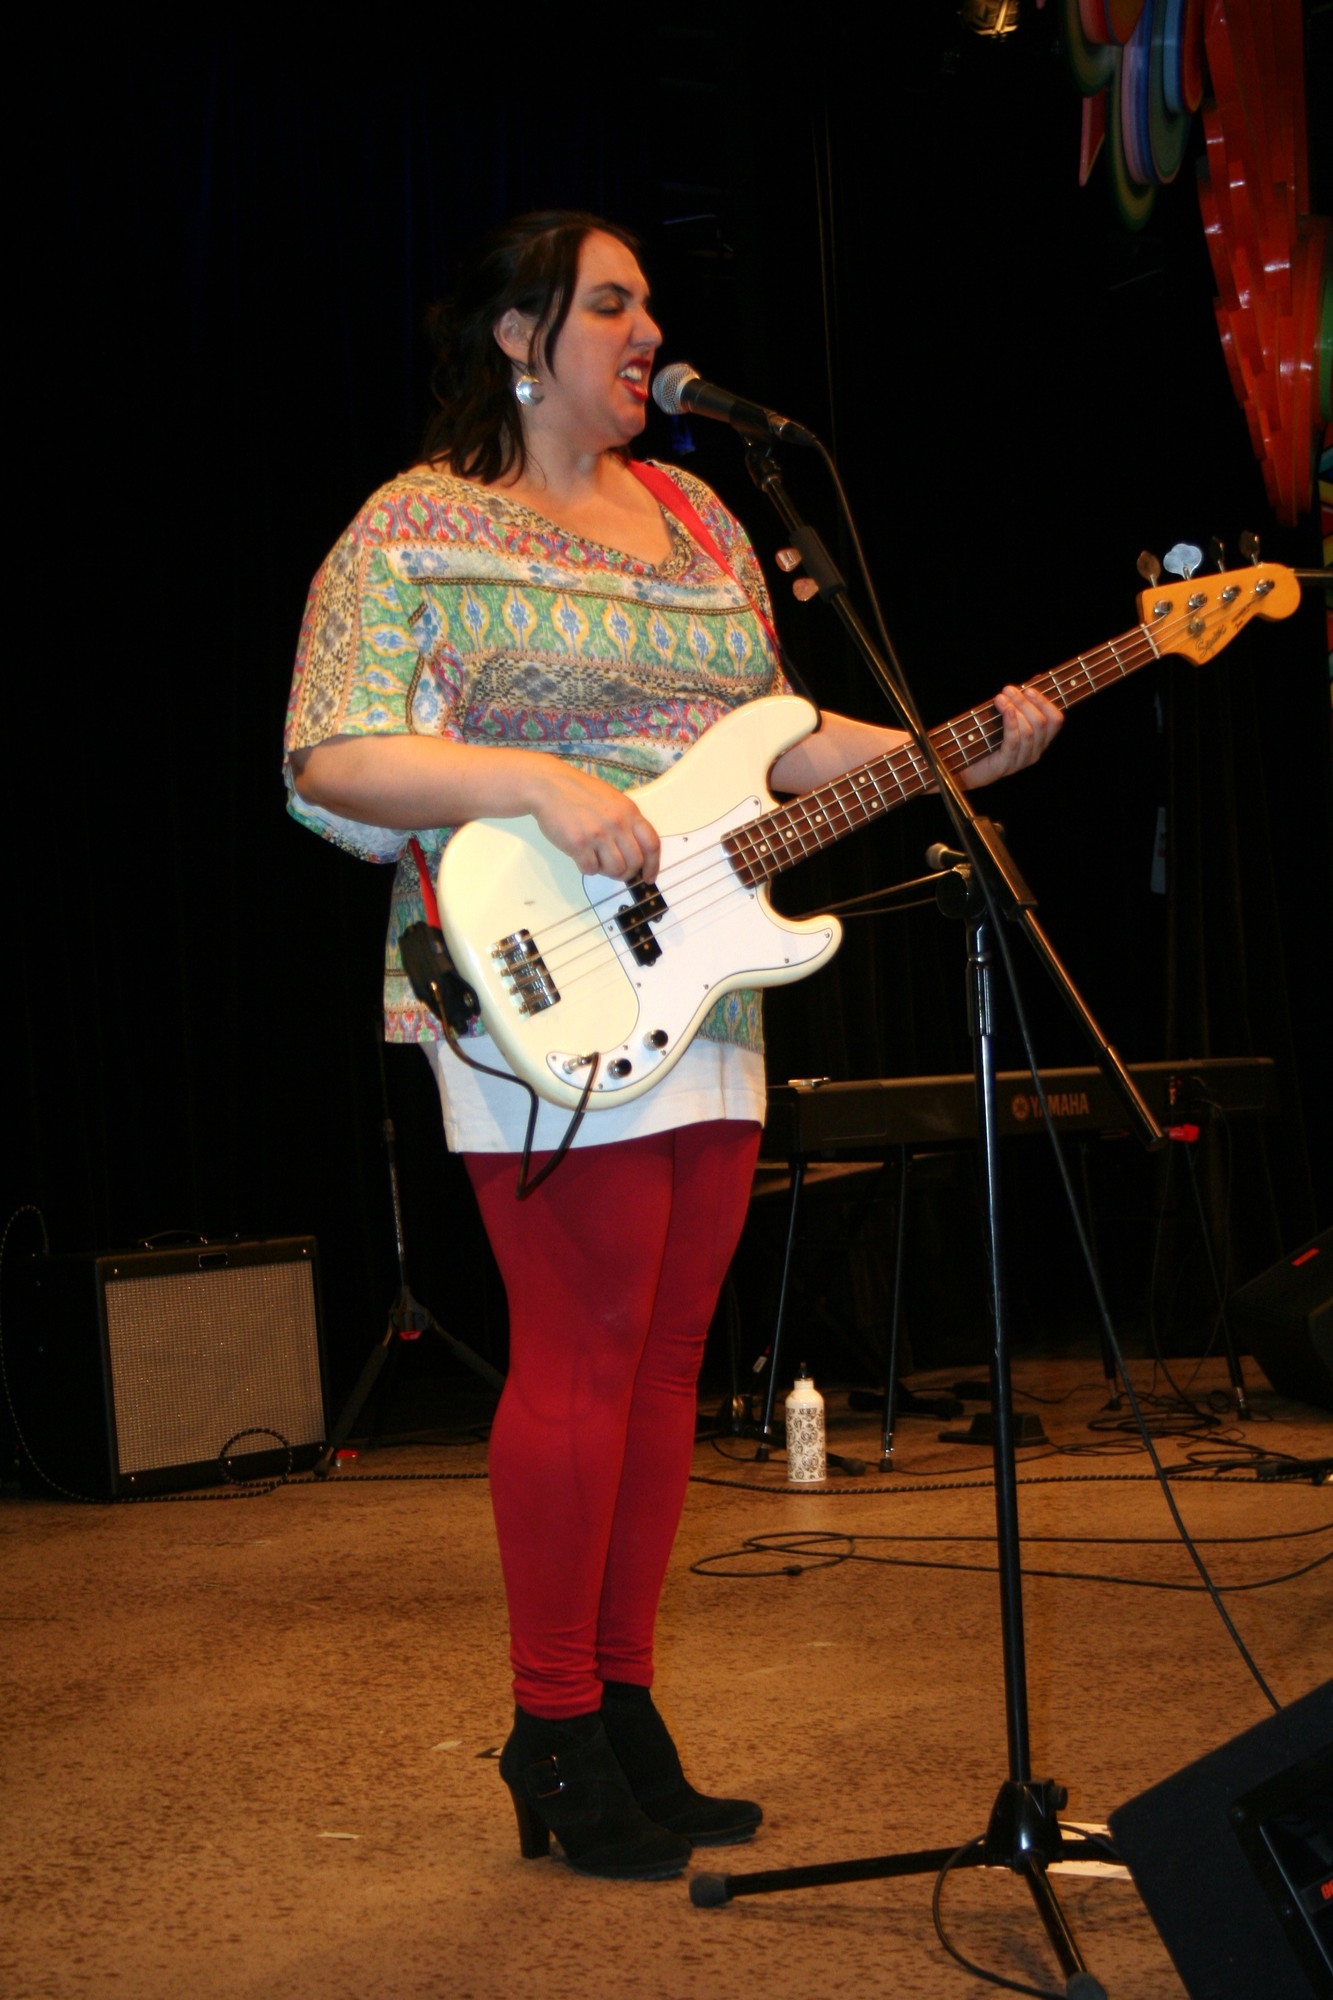 Guitarist Tina Kenny sang out a tune.